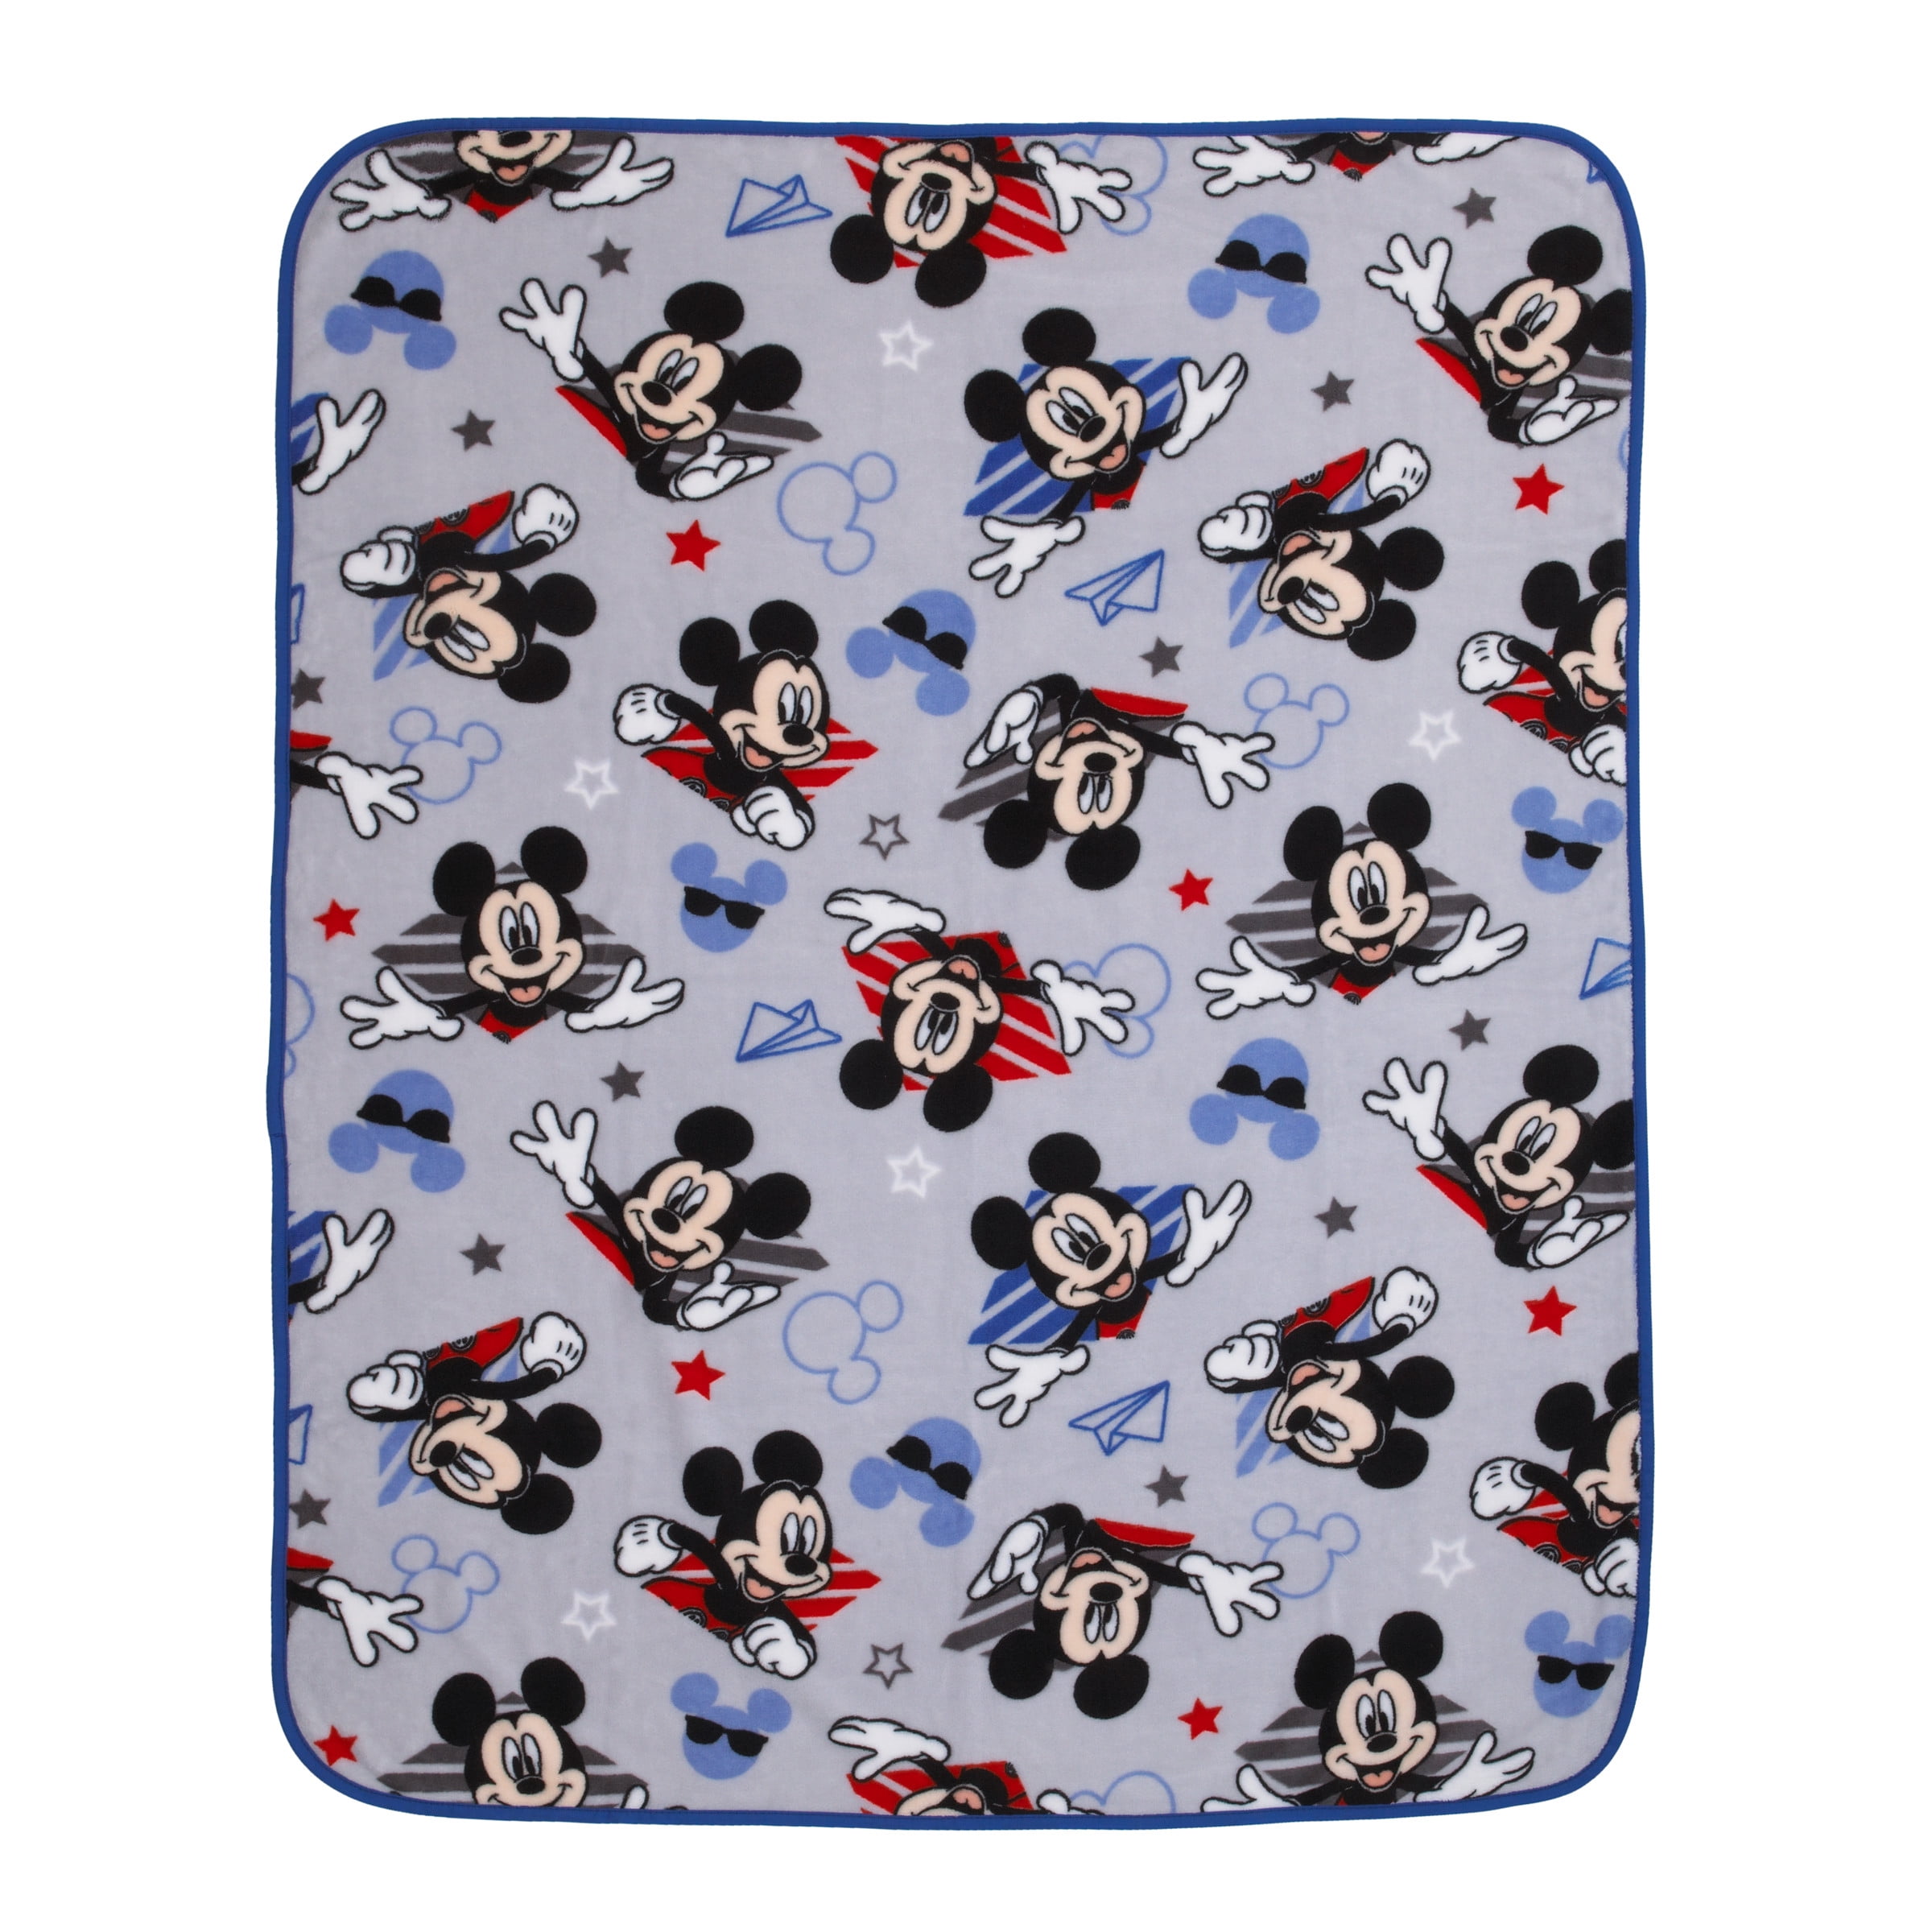 Classic Disney Mickey Mouse Red Twin sized Blanket Plush Fleece Throw 